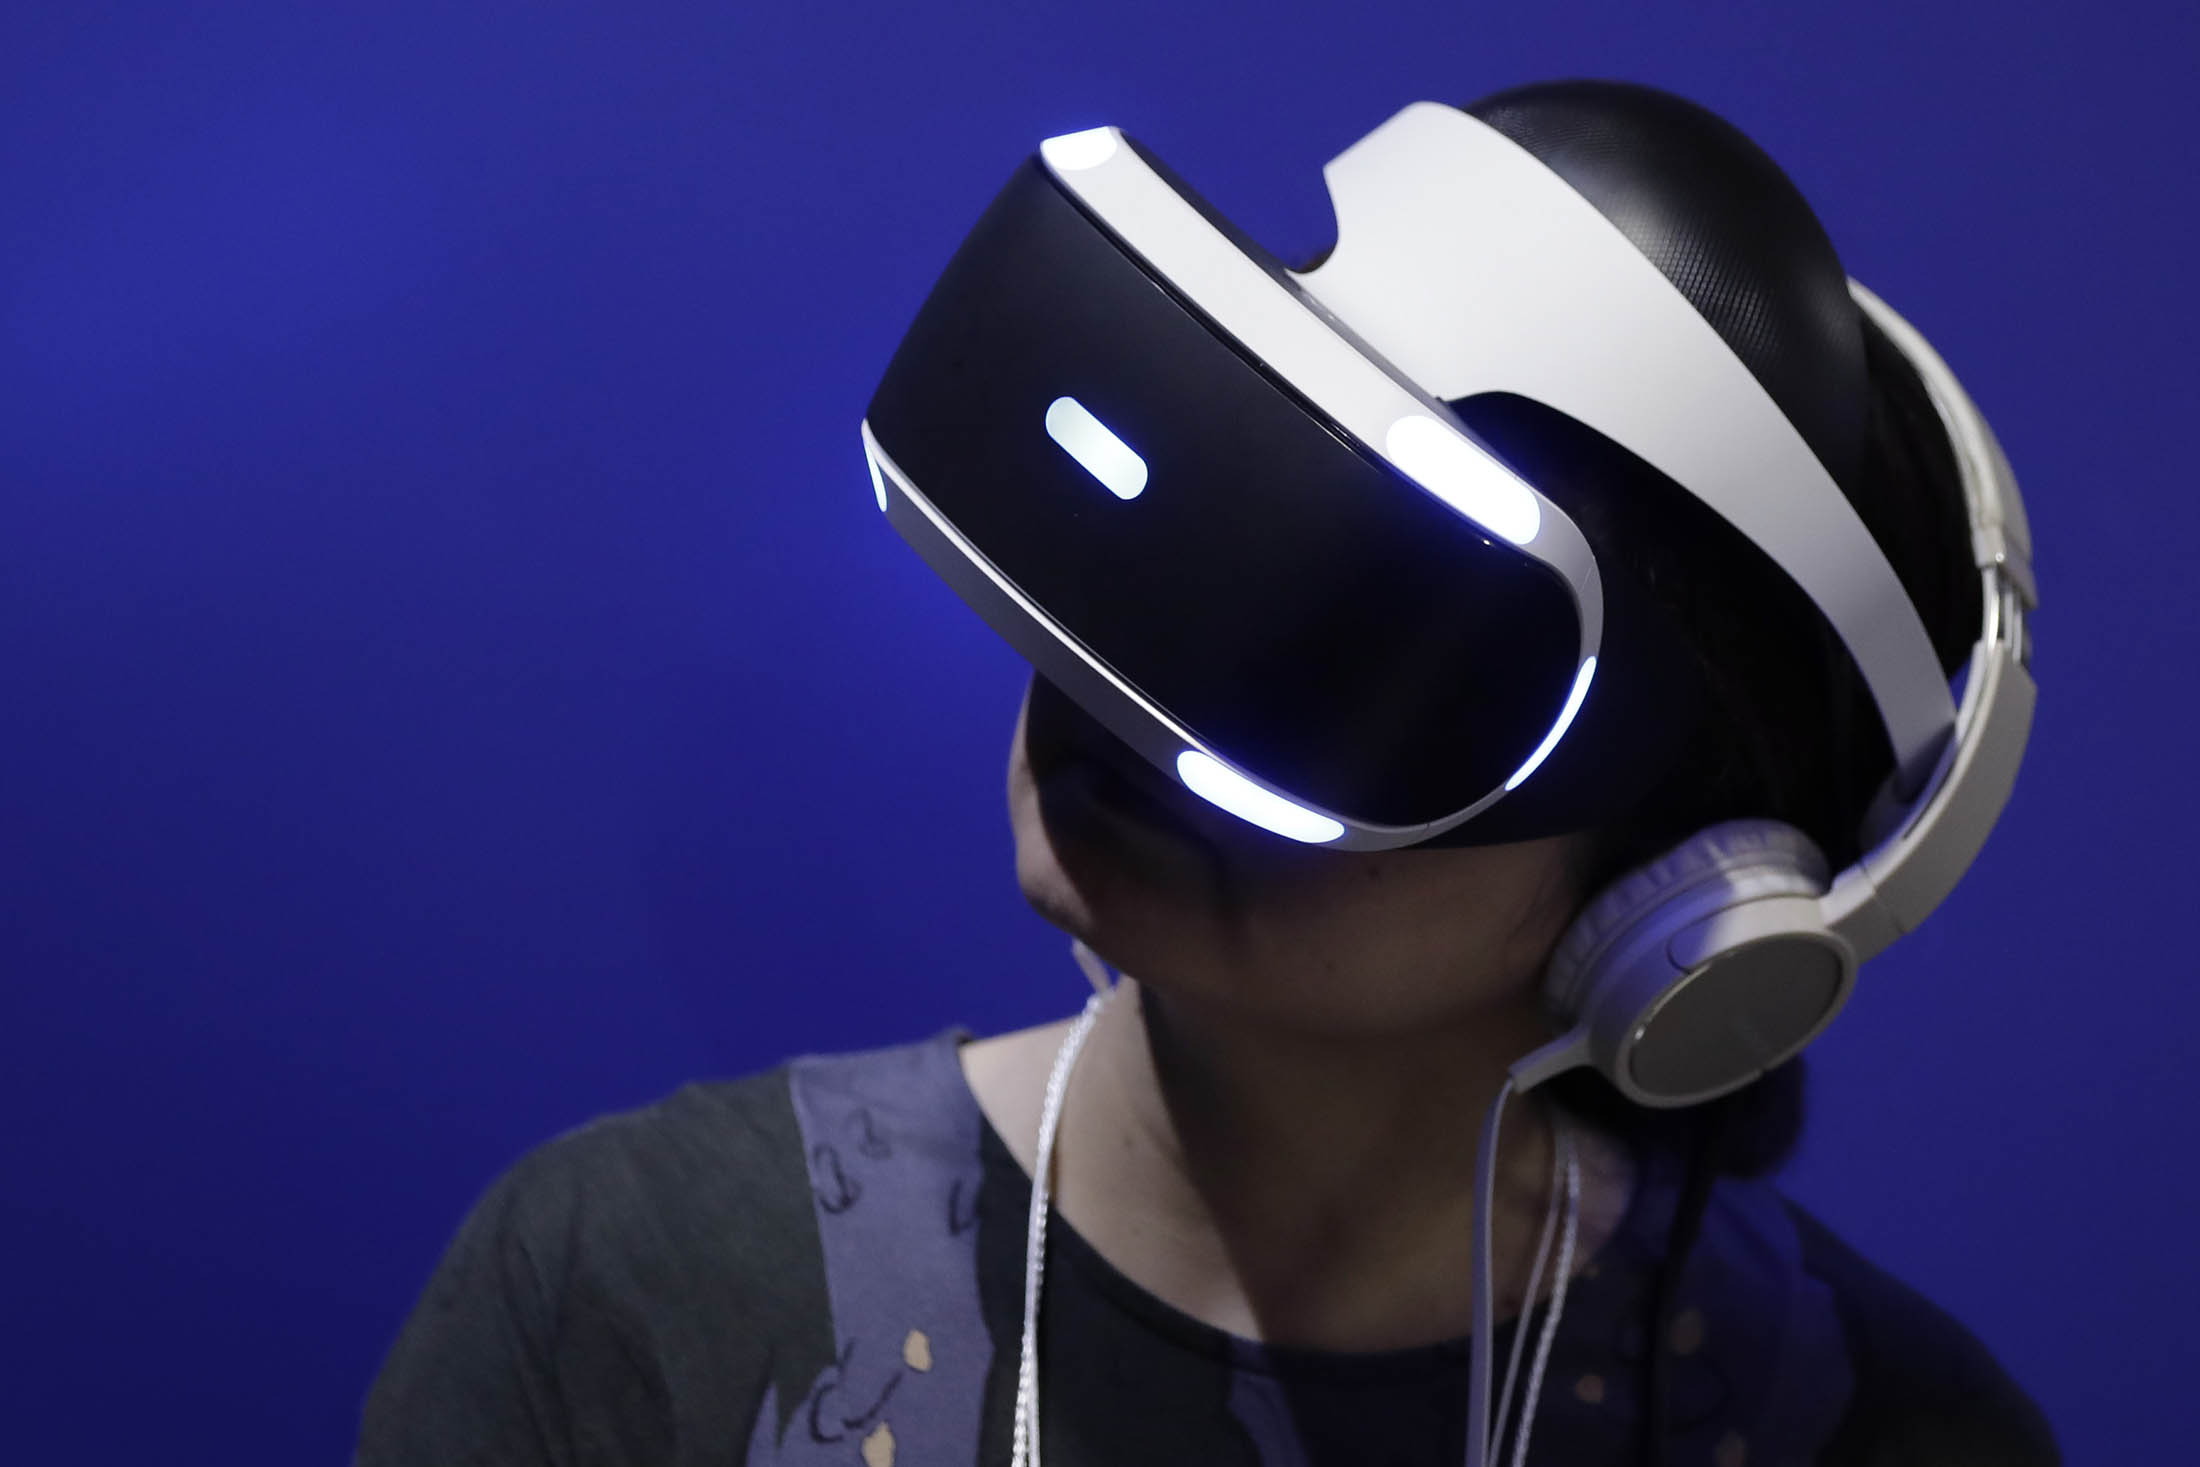 virtual reality headset gamestop